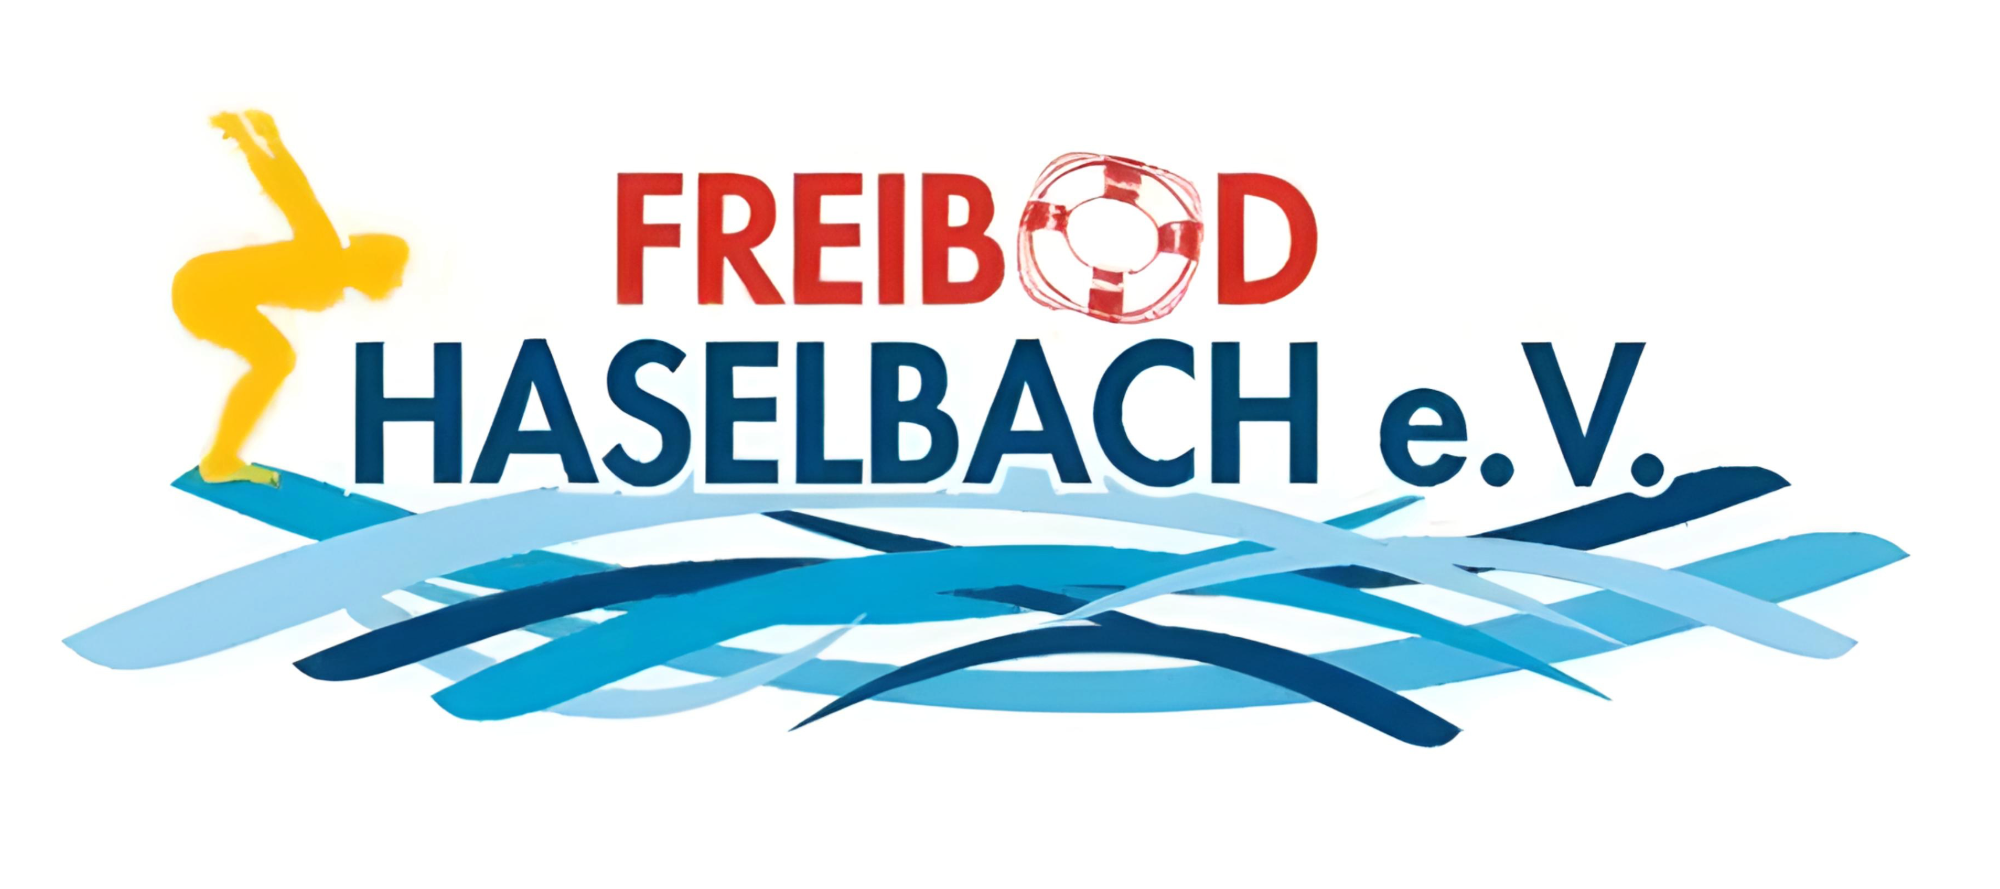 Freibad Haselbach e.V.